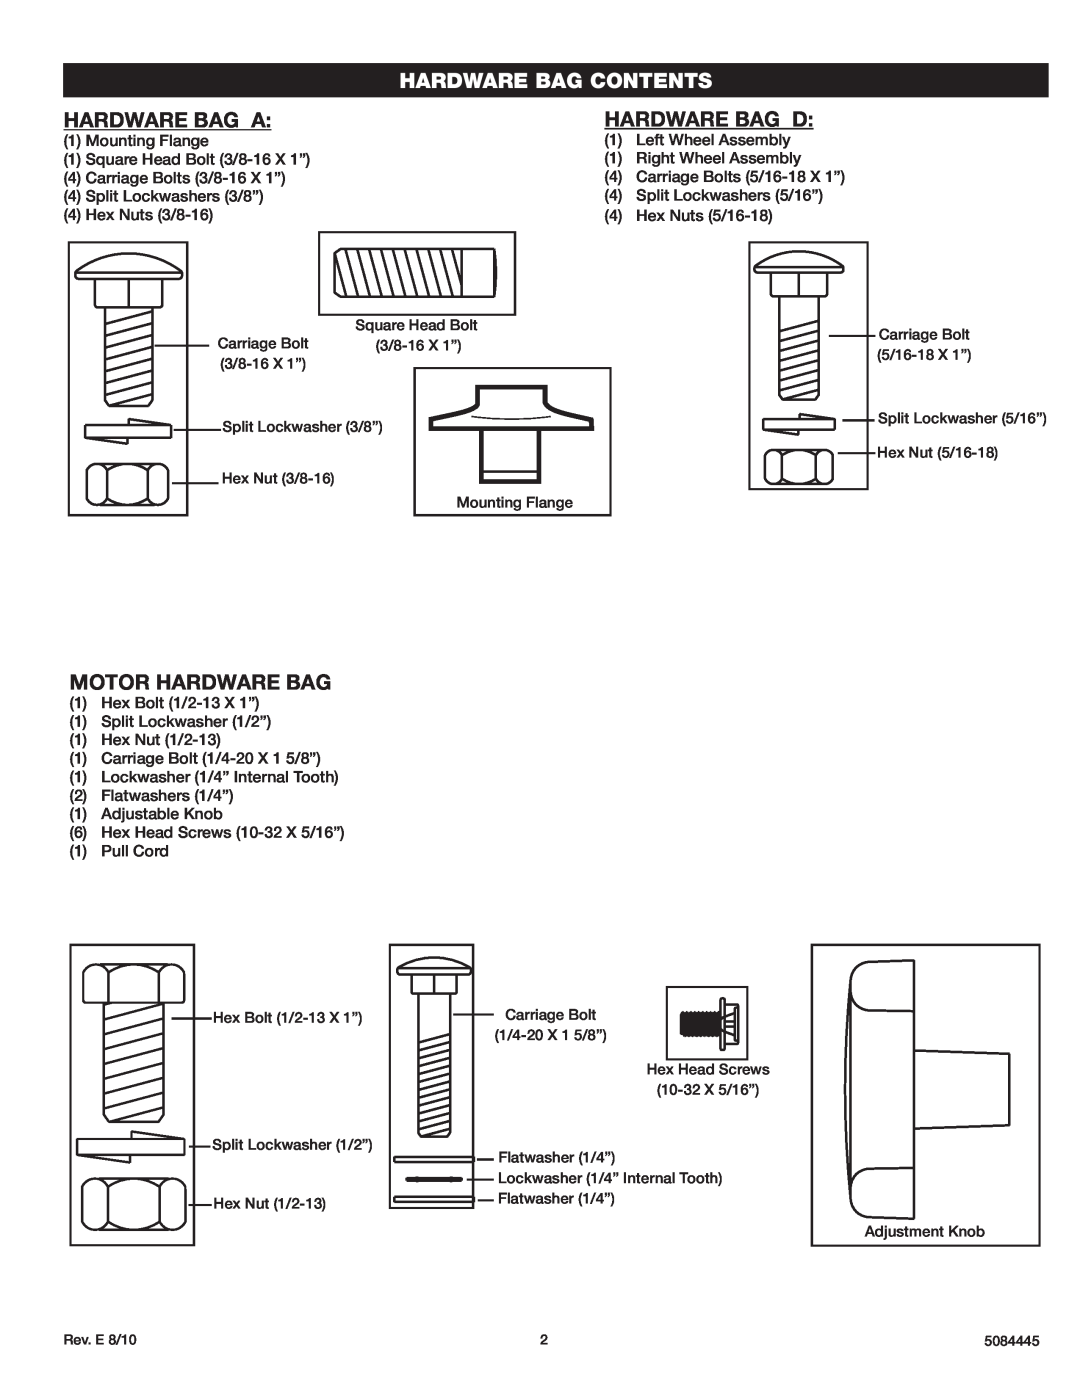 Lasko 3138 instruction sheet Hardware Bag Contents, Hardware Bag A, Hardware Bag D, Motor Hardware Bag 